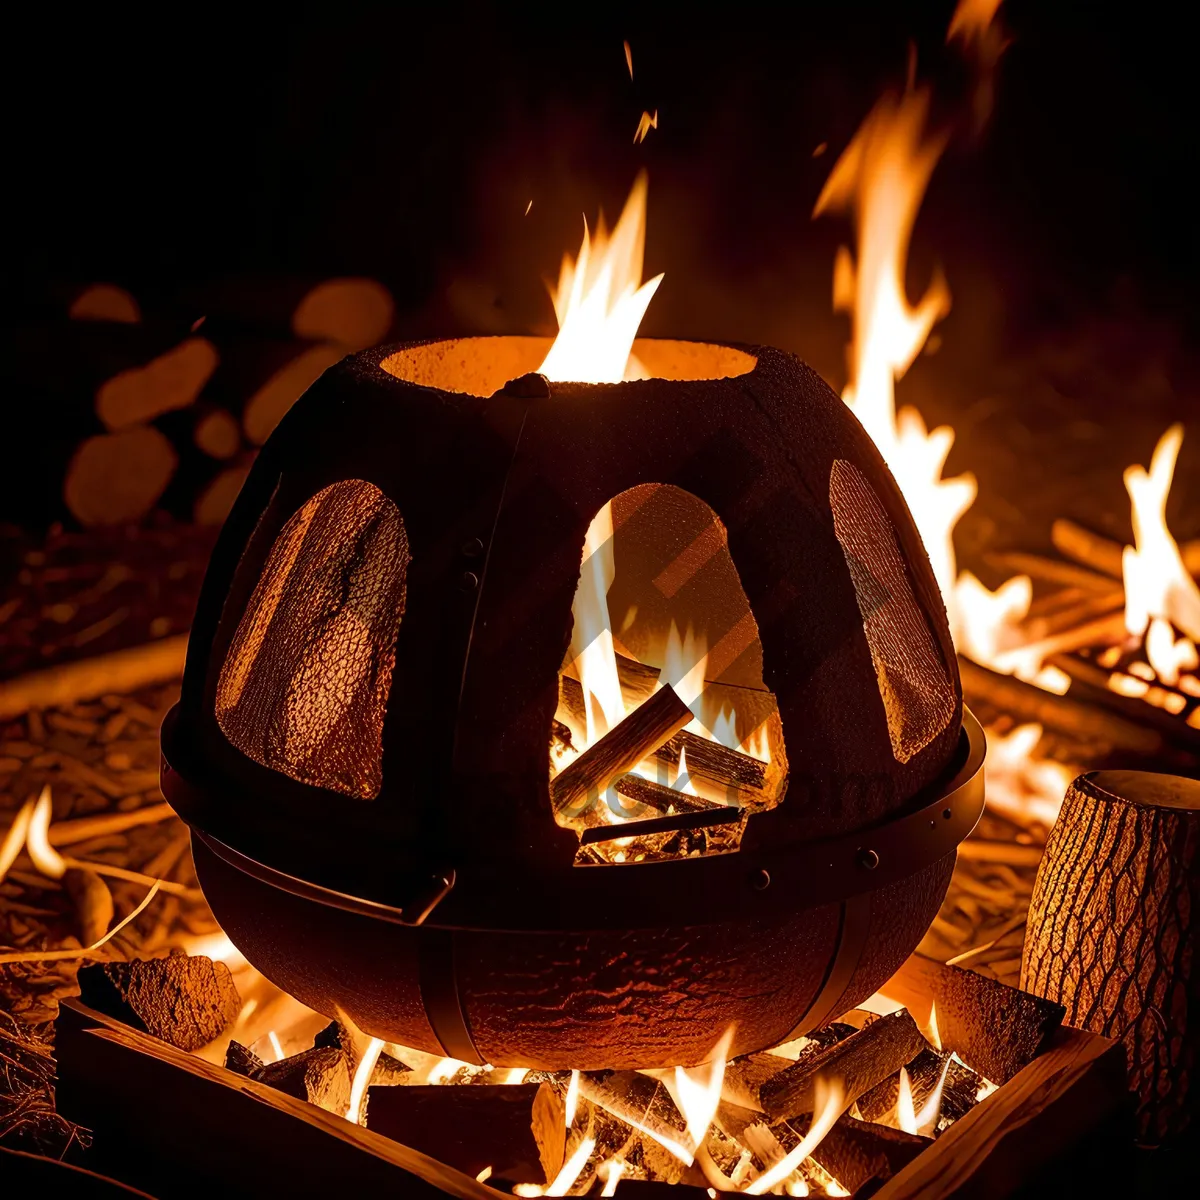 Picture of Spooky Pumpkin Jack-O'-Lantern Illuminating the Night